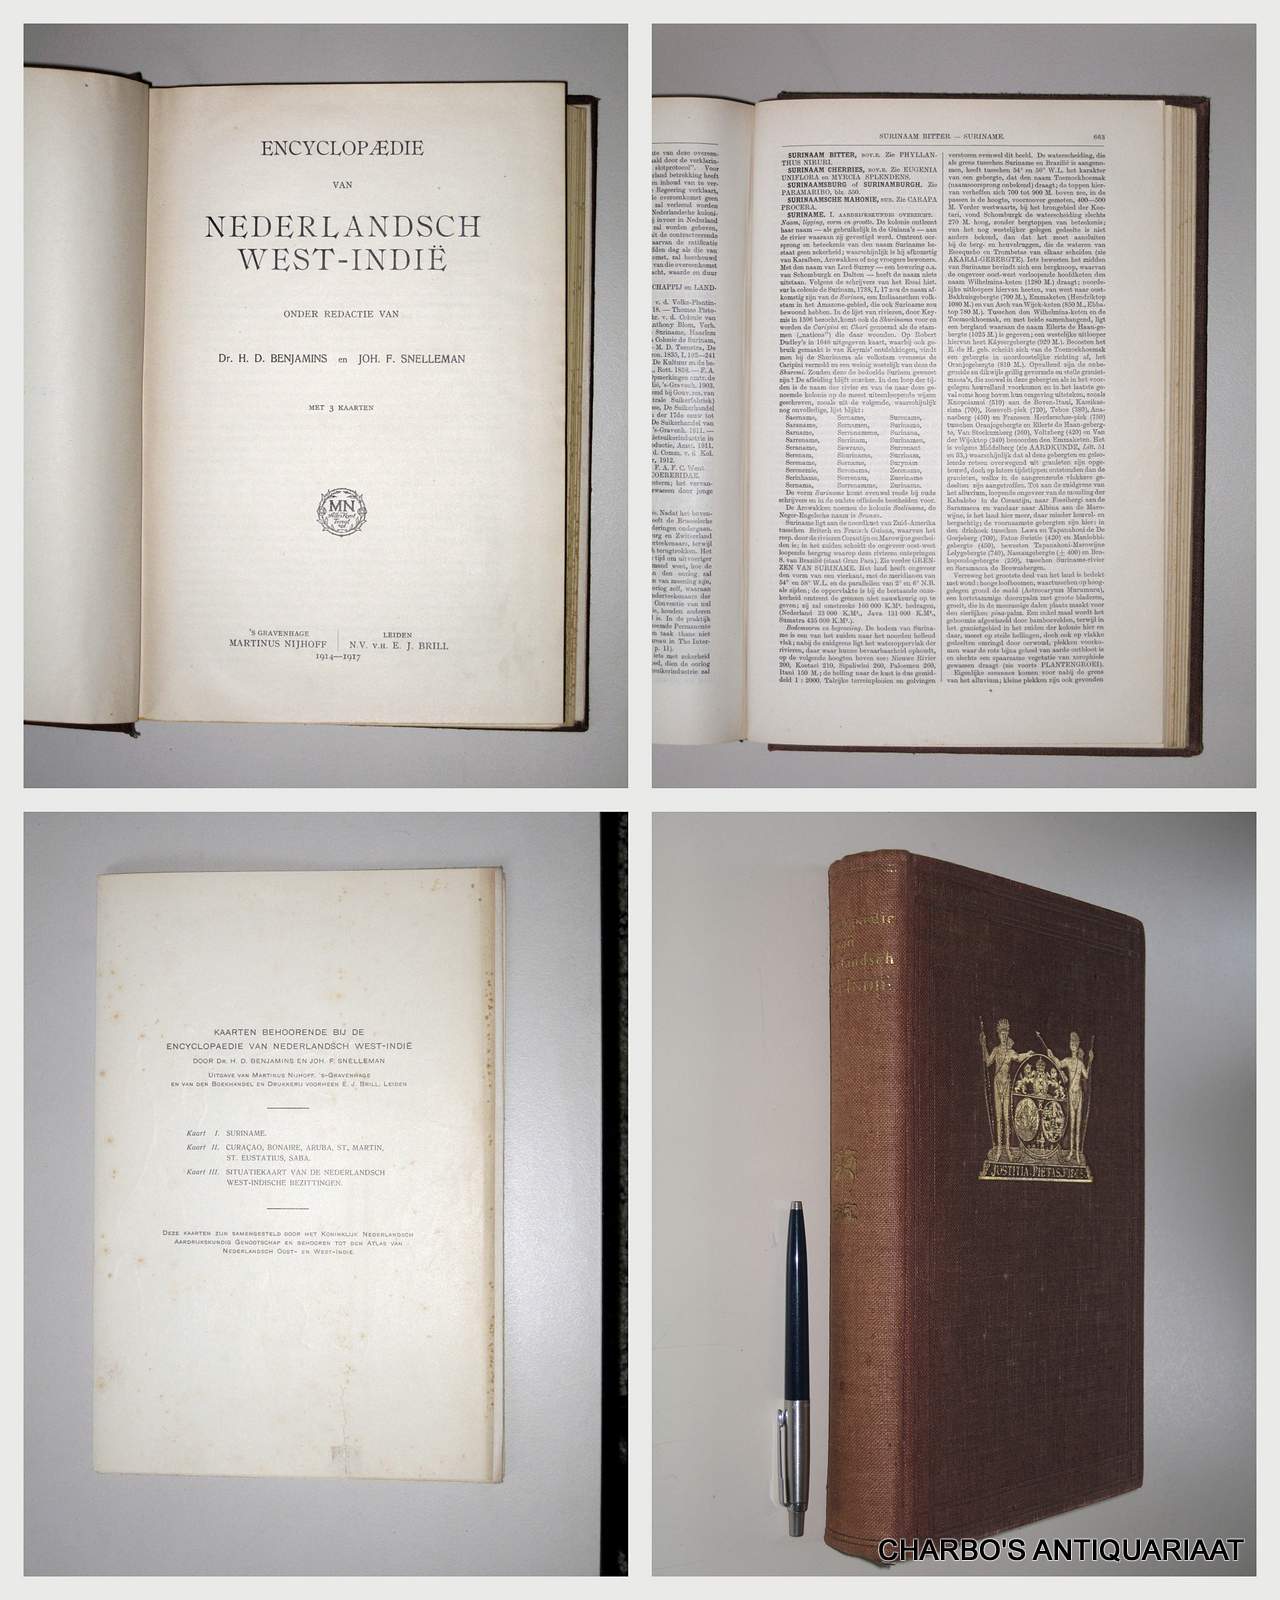 BENJAMINS, H.D. & J.F. SNELLEMAN (eds.), -  Encyclopaedie van Nederlandsch West-Indi.